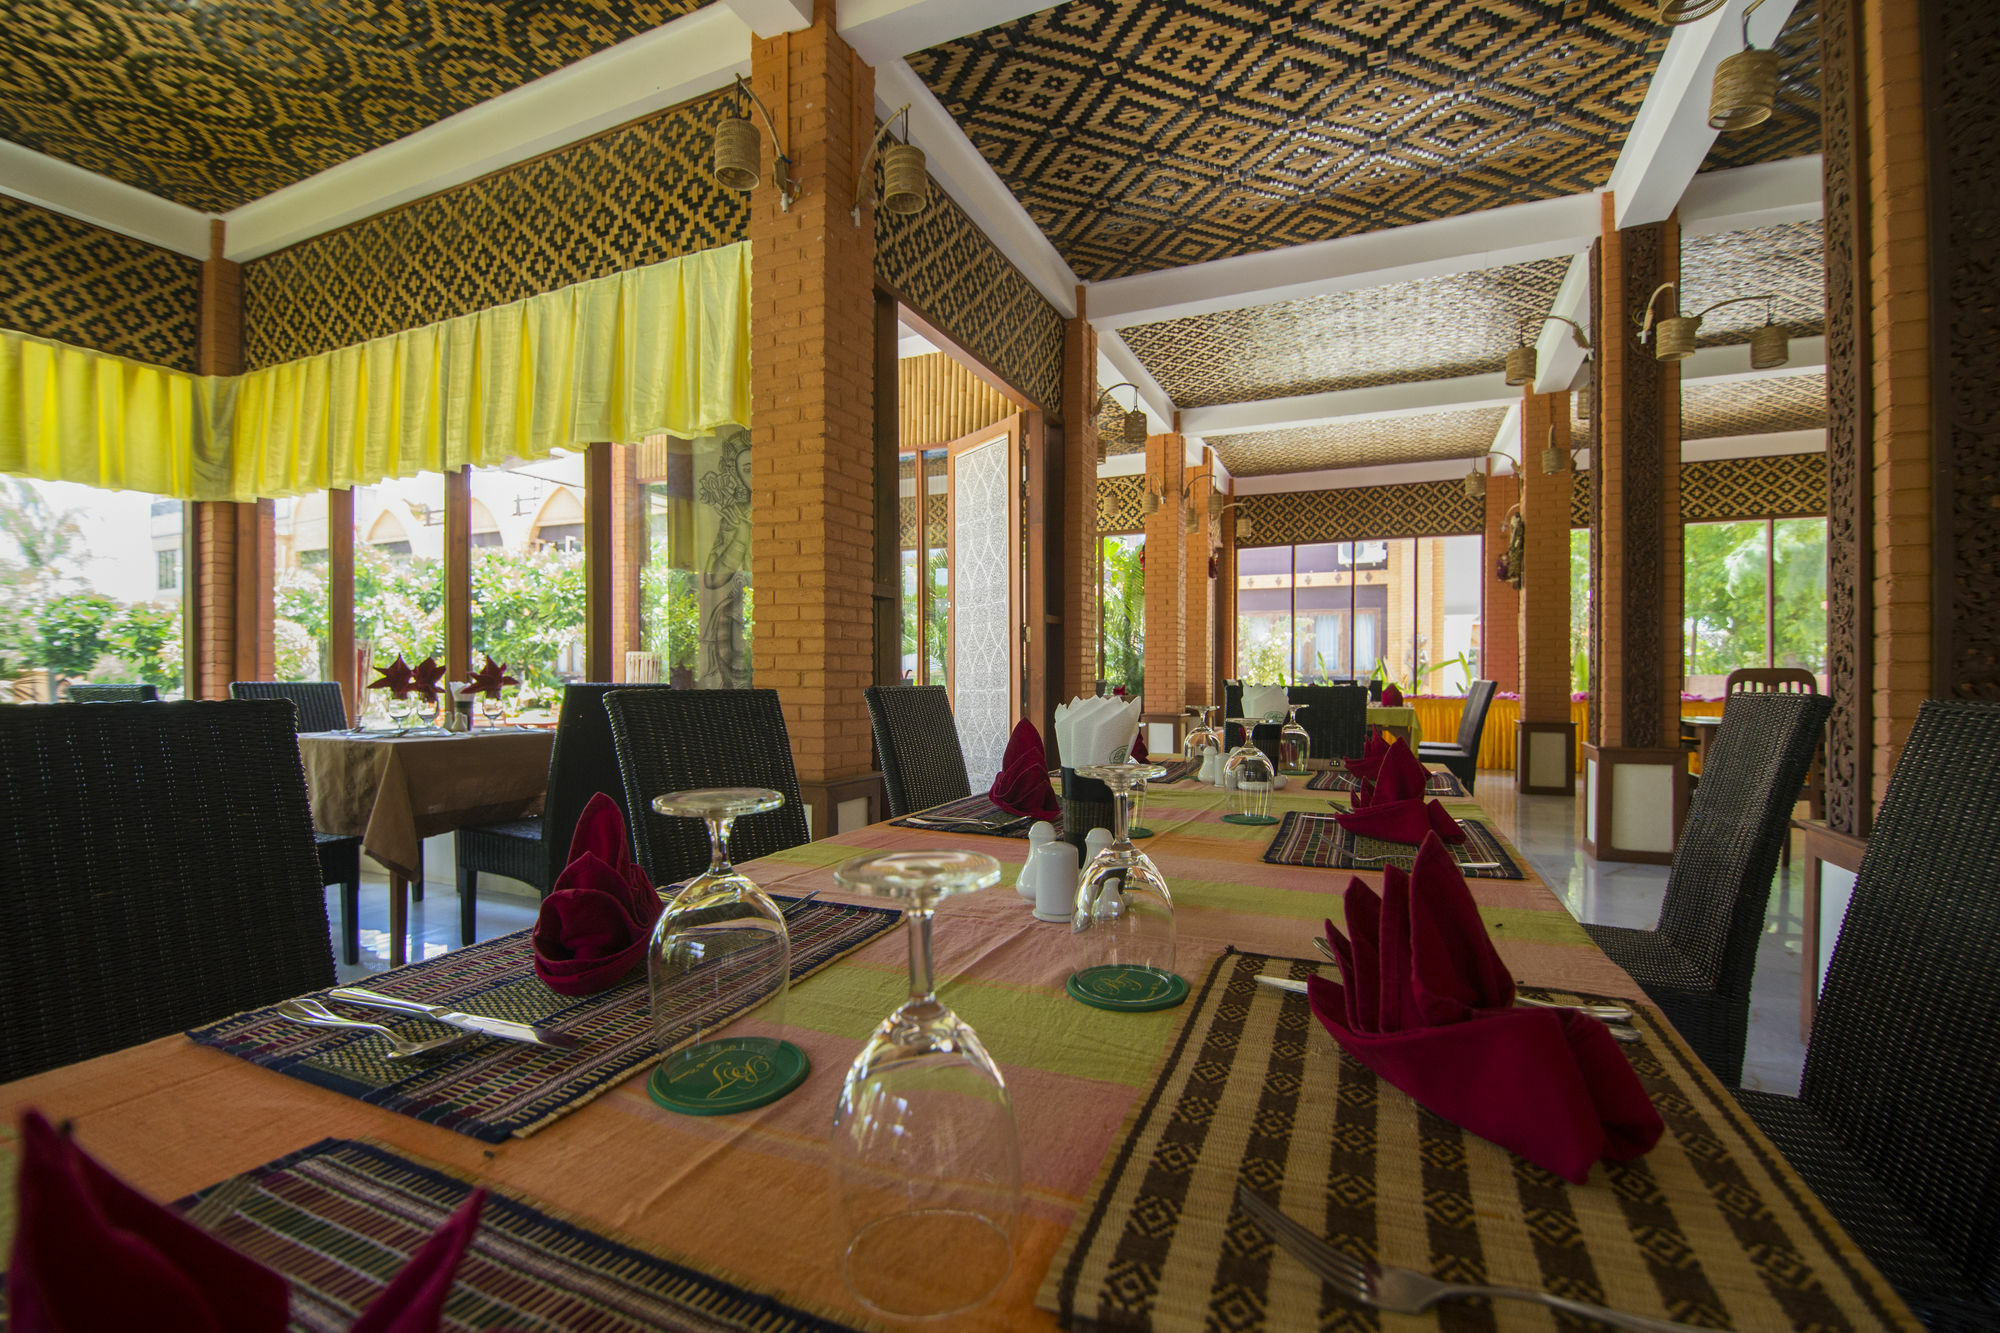 Bawga Theiddhi Hotel Bagan Exterior foto